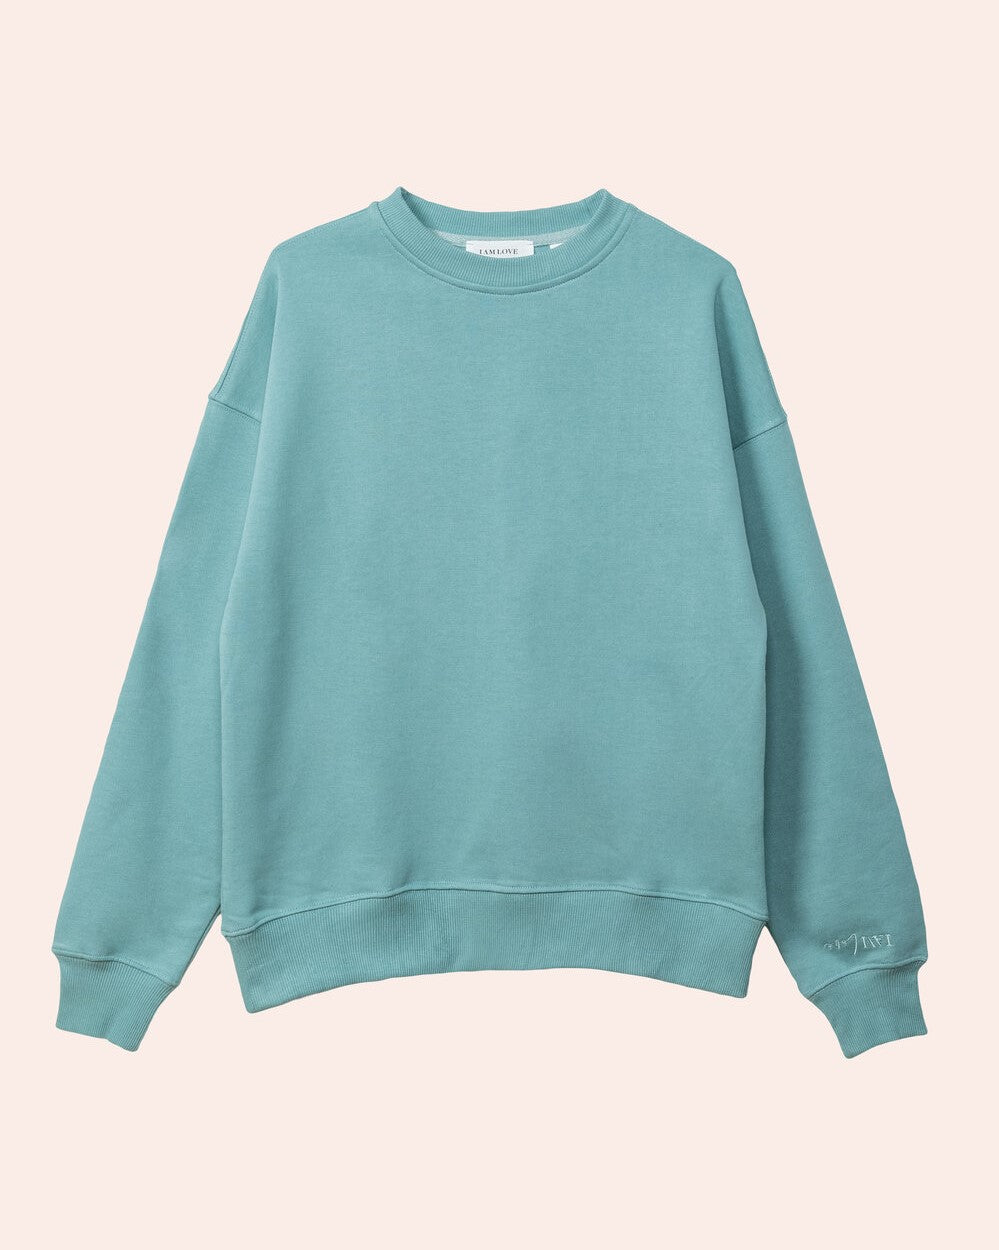 I AM LOVE Sweatshirt (turquoise)